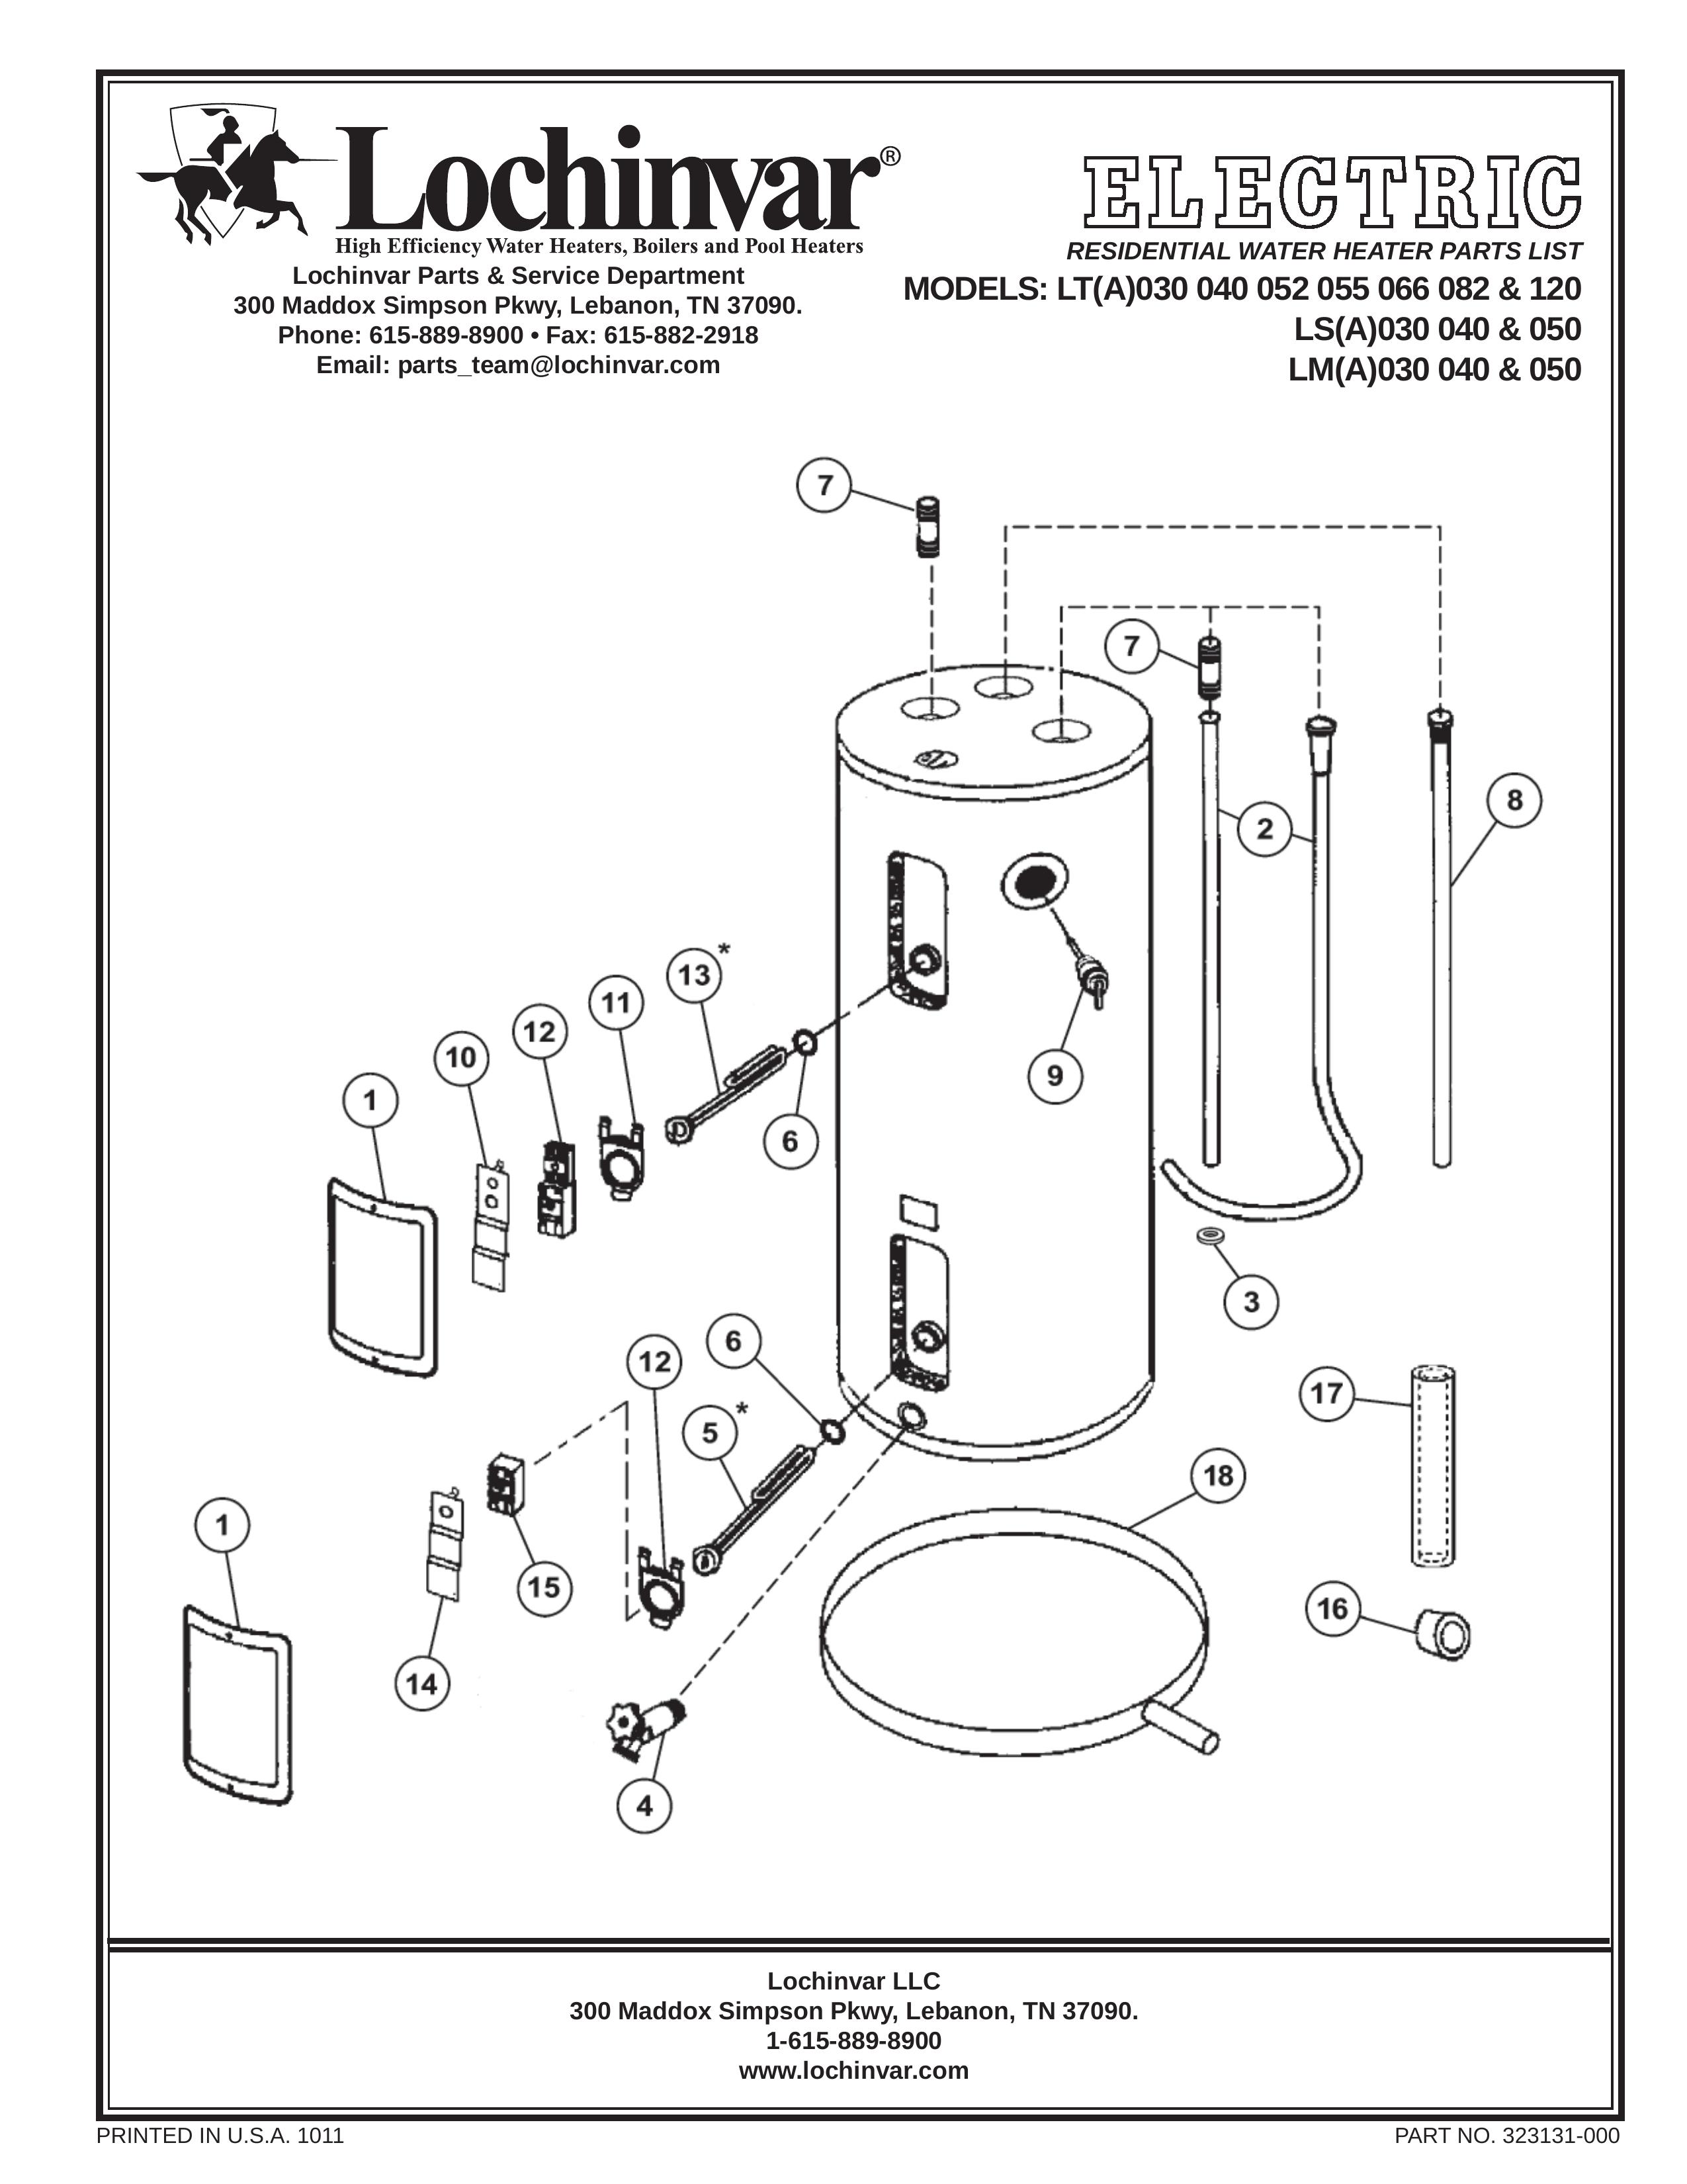 Lochinvar 050 LM(A)030 040 Marine Heating System User Manual